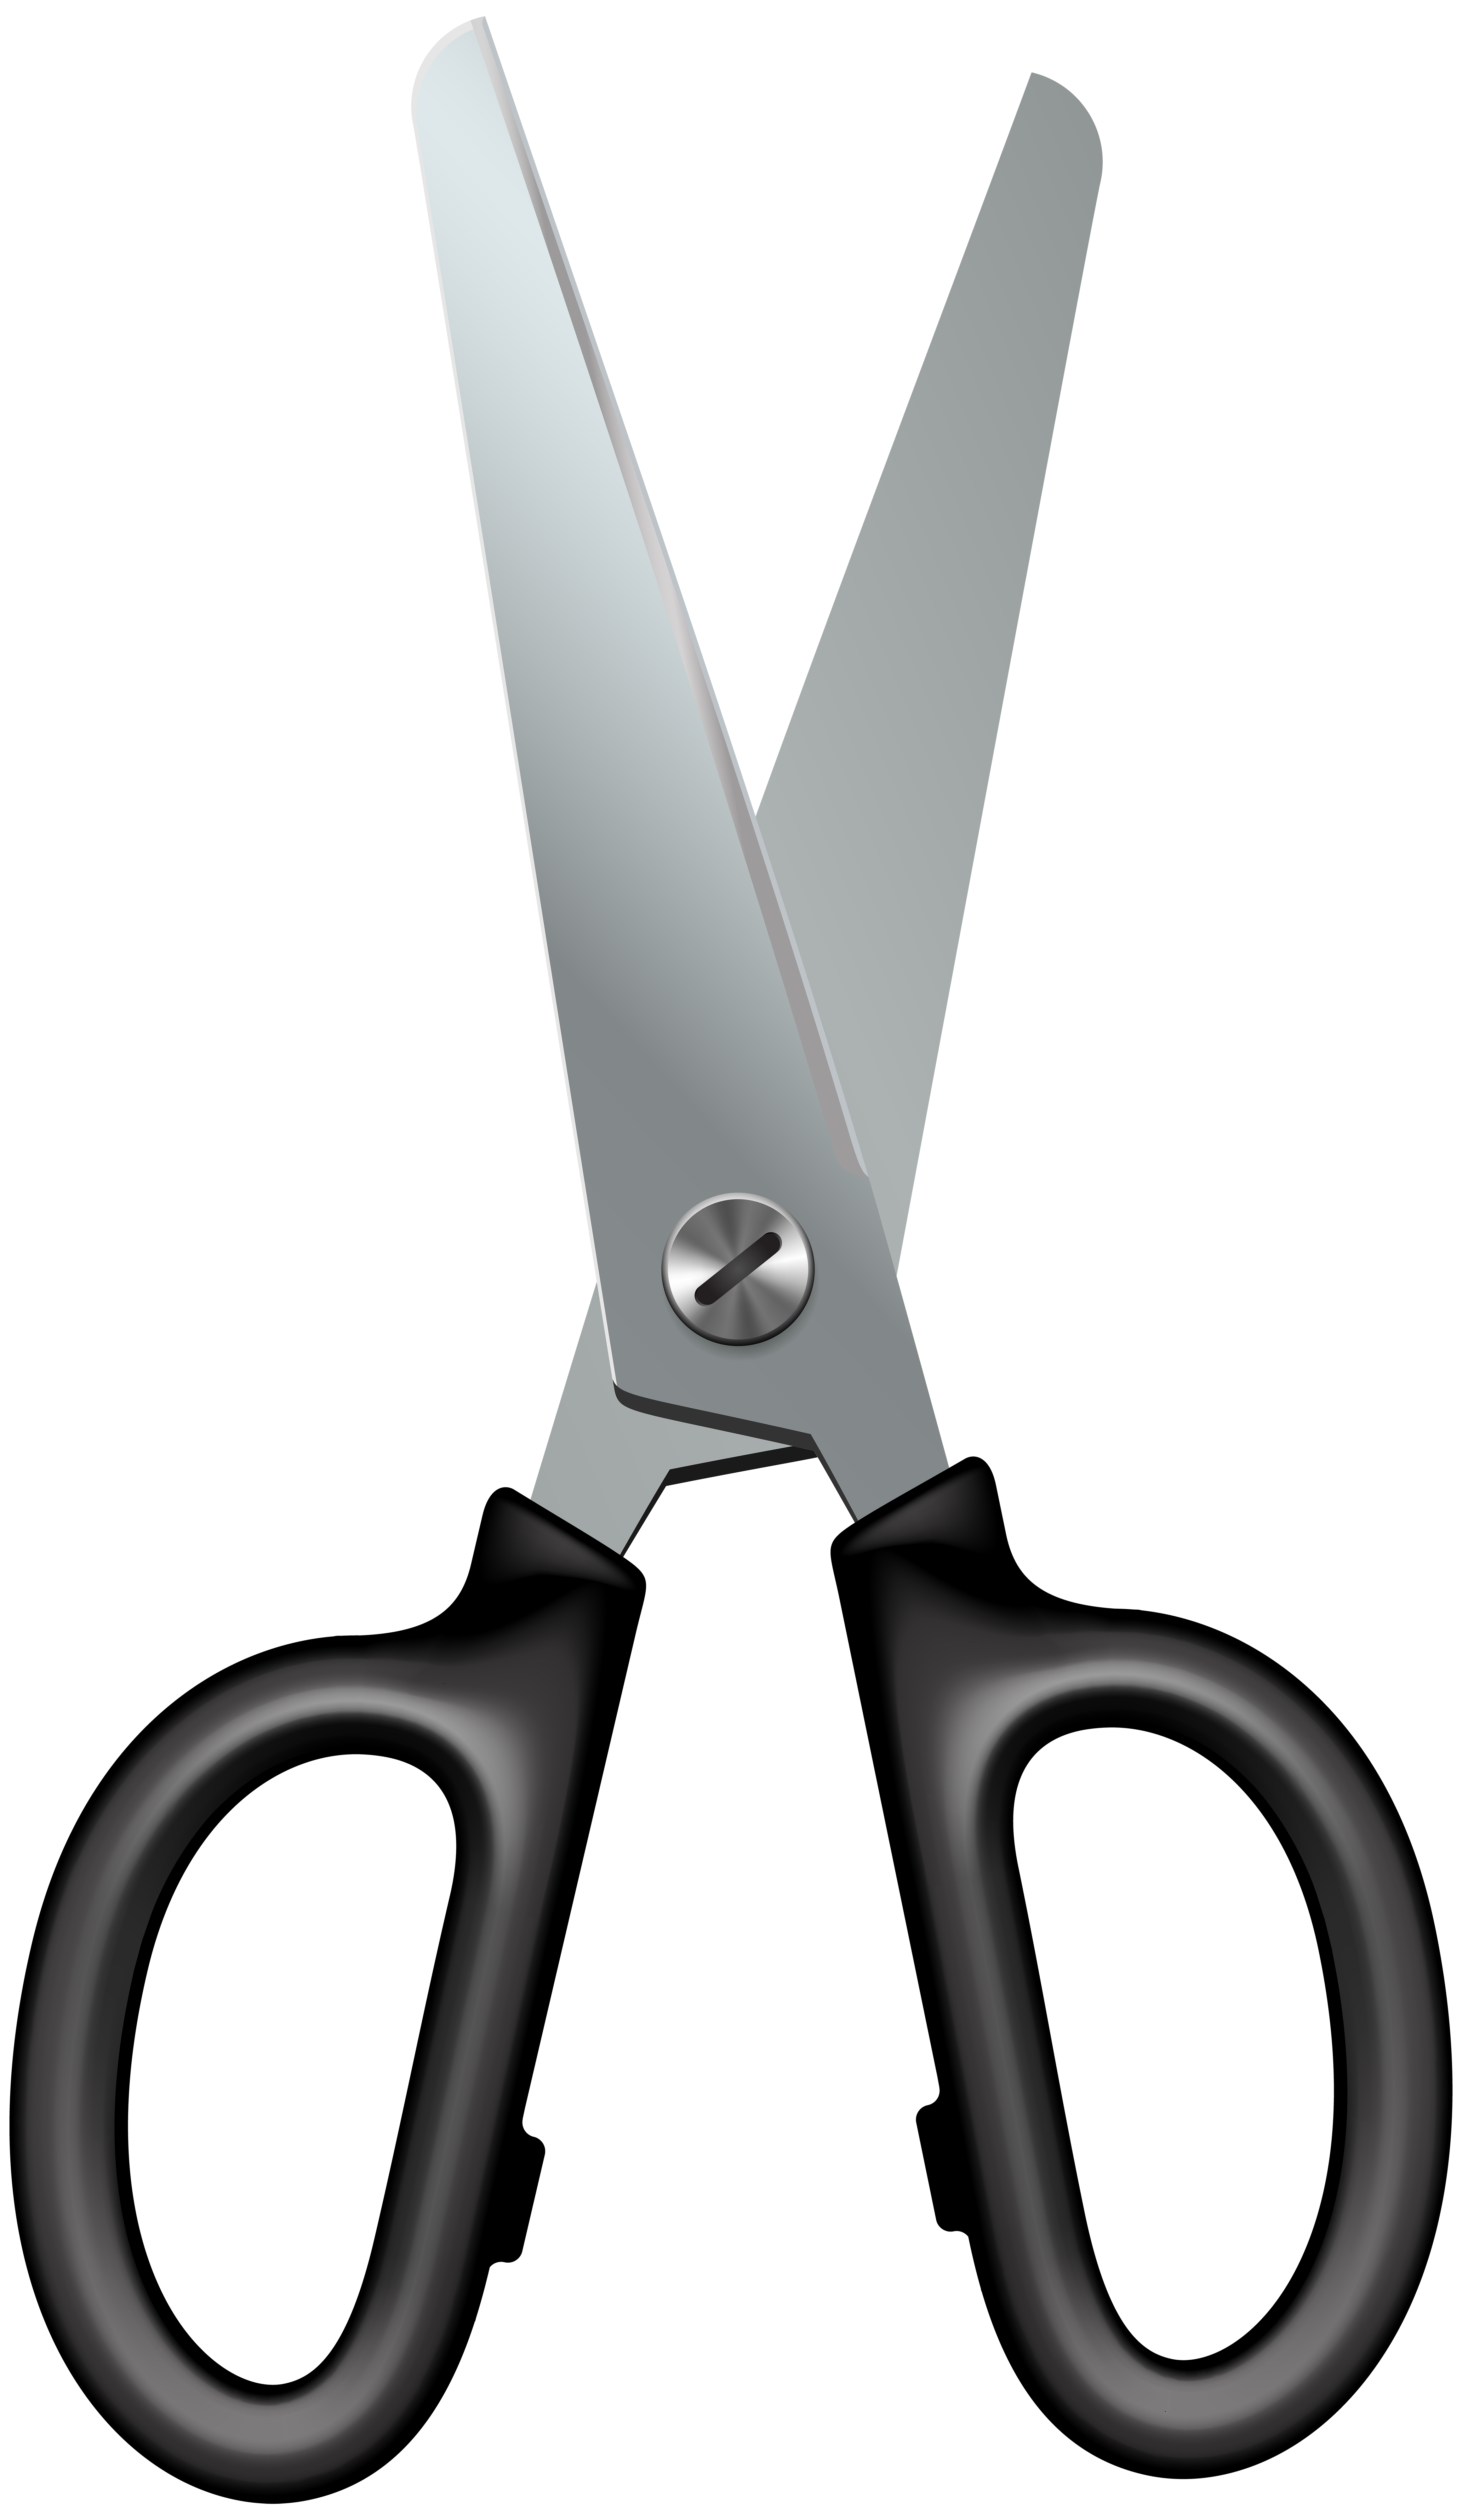 school scissors clipart